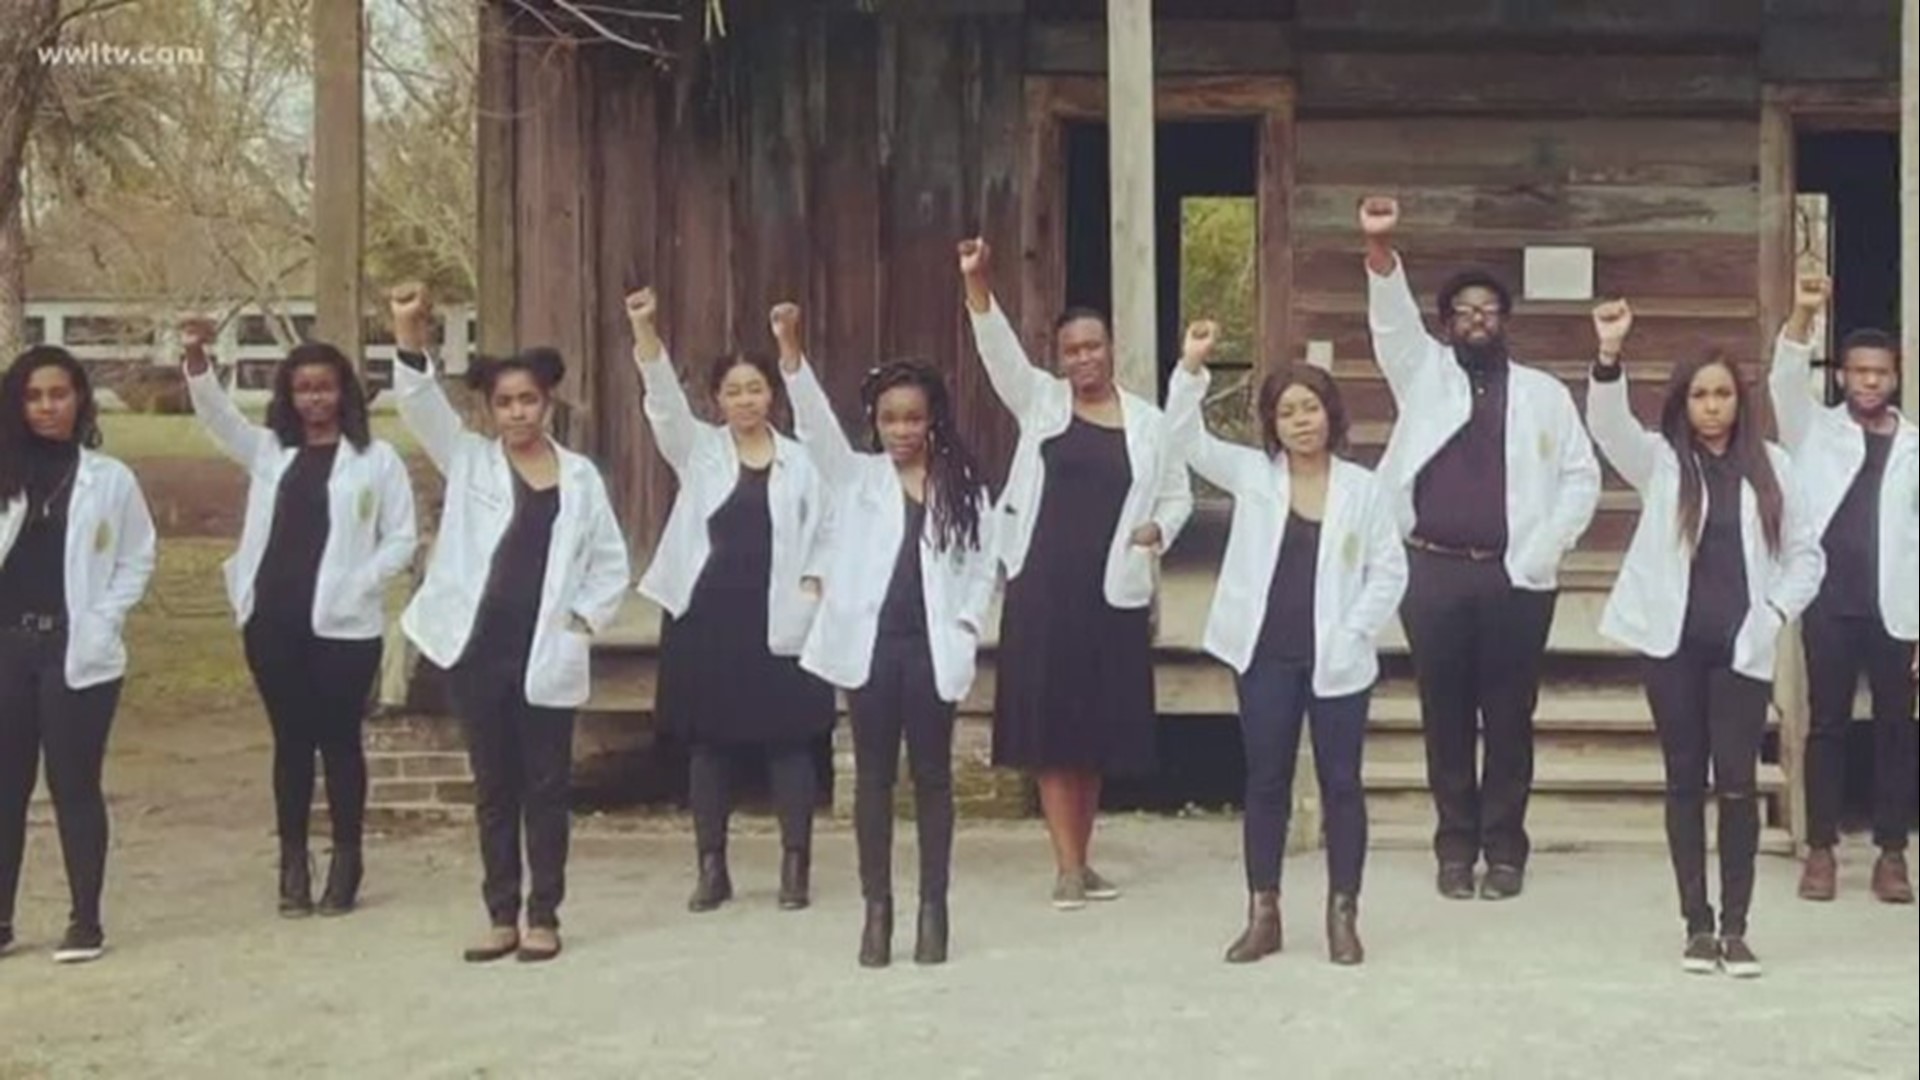 Tulane med students take 'iconic' photos at plantation